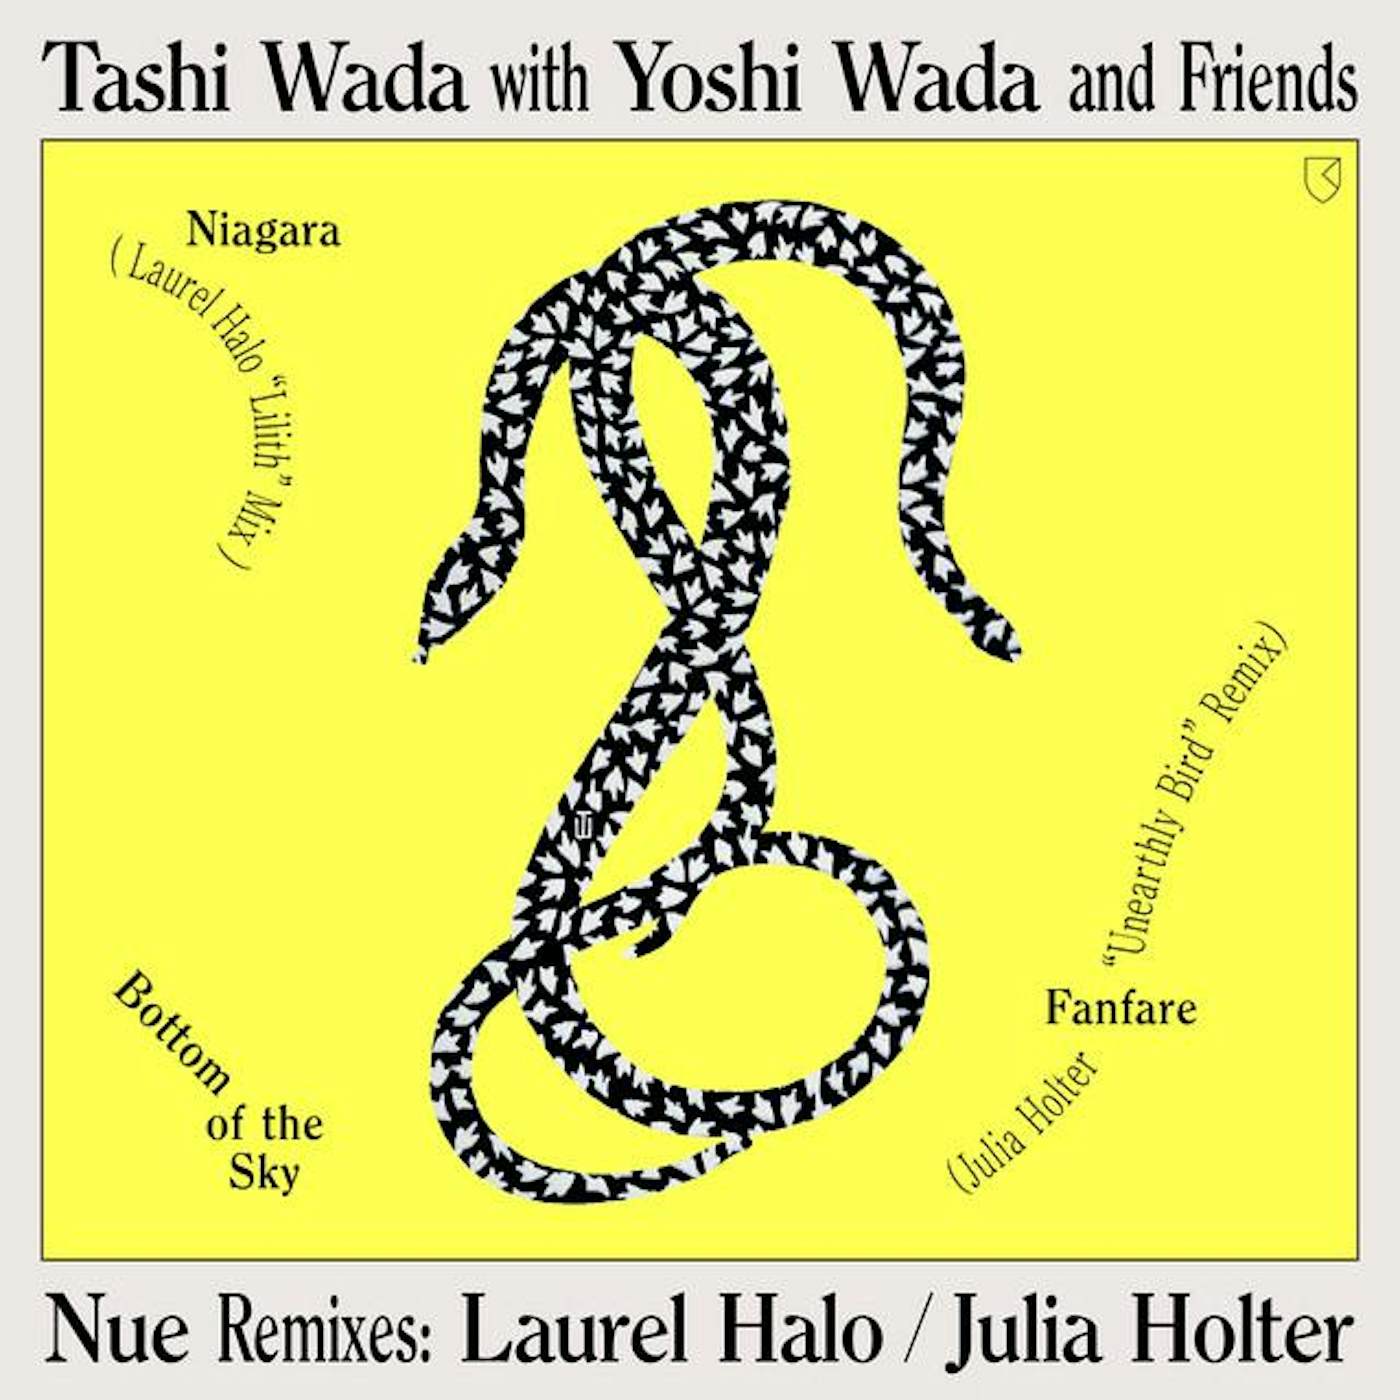 Tashi Wada with Yoshi Wada and Friends